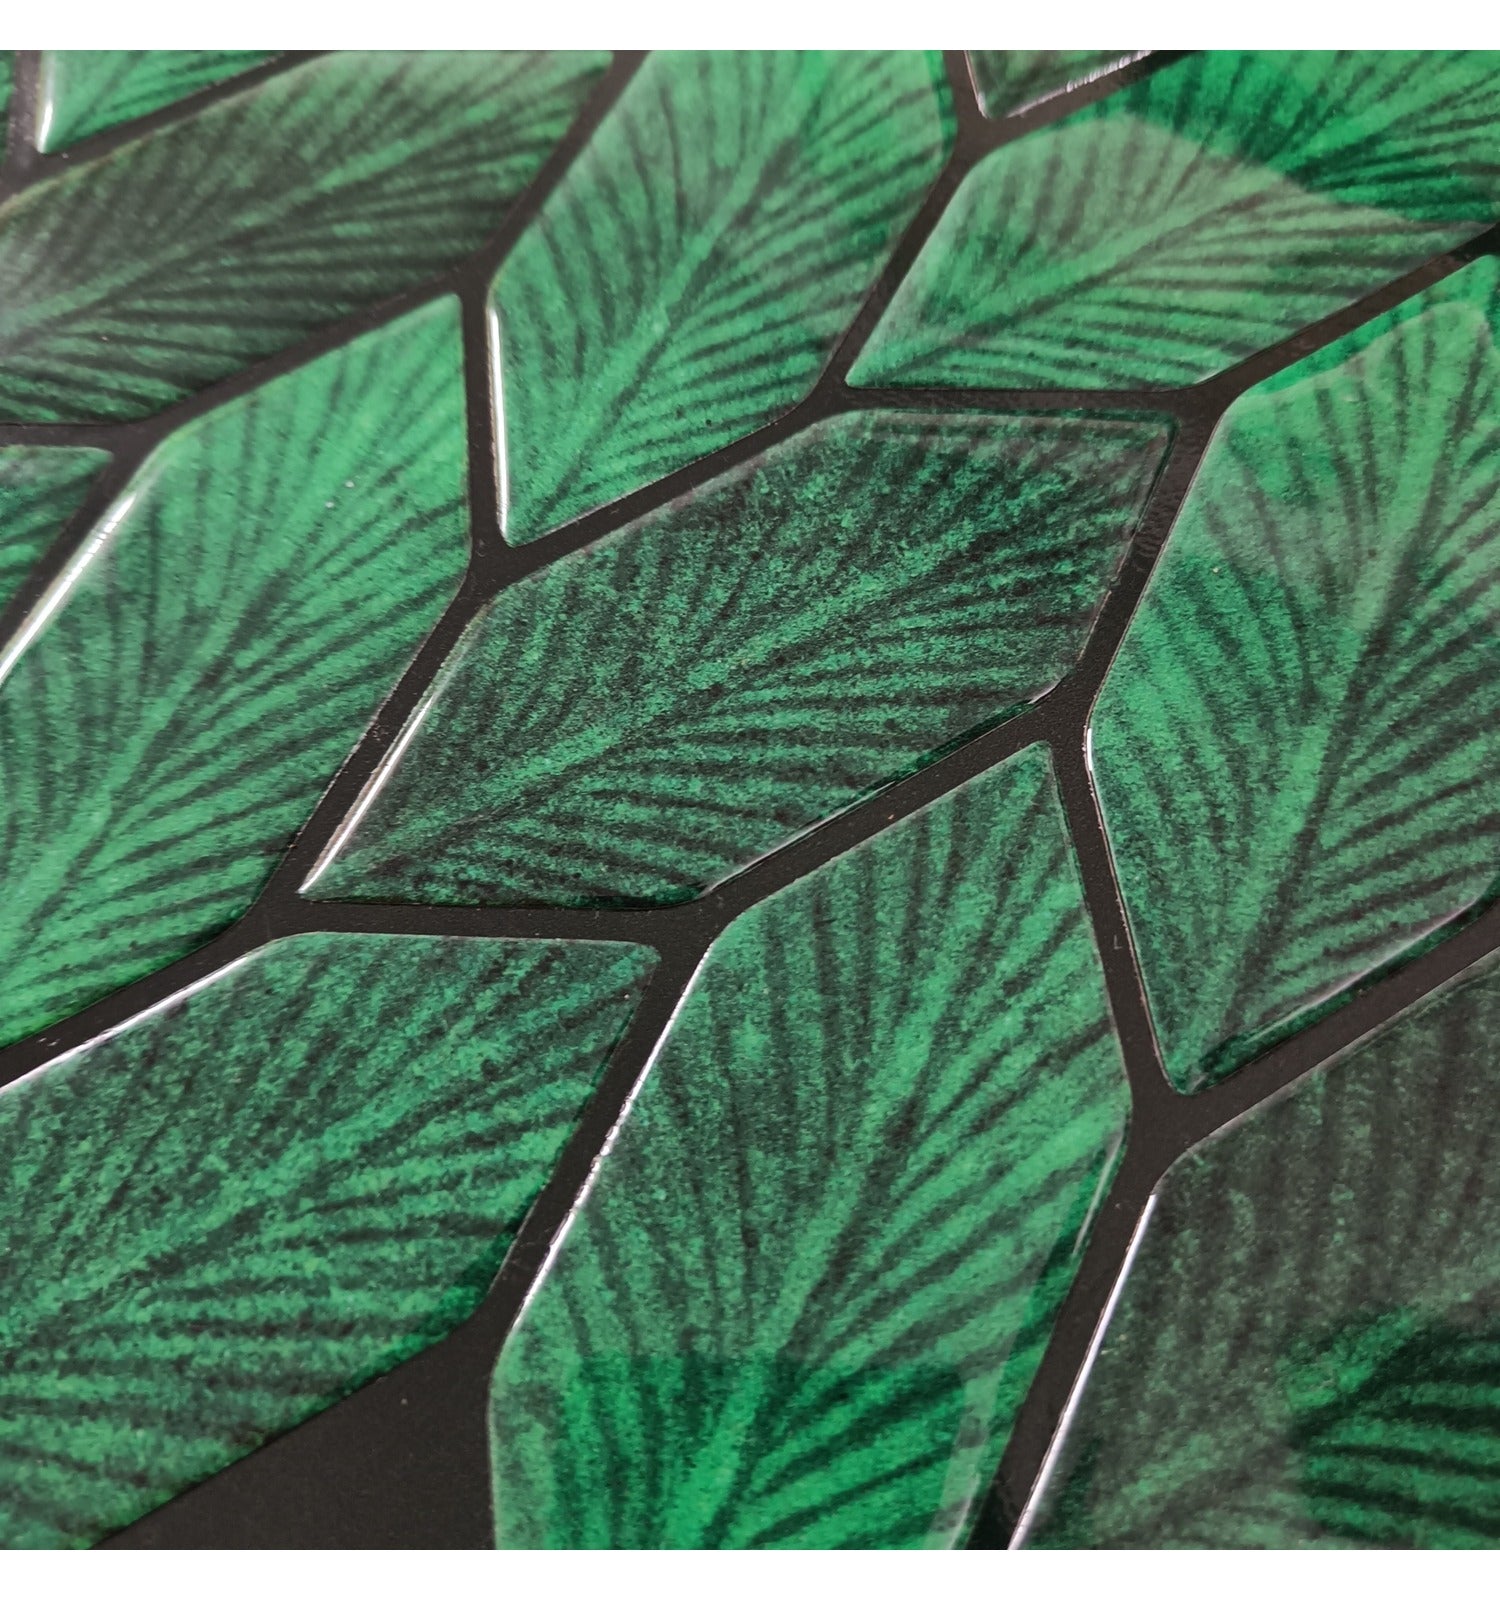 Leafy Emerald Green Peel And Stick Wall Tile | Kitchen Backsplash Tiles